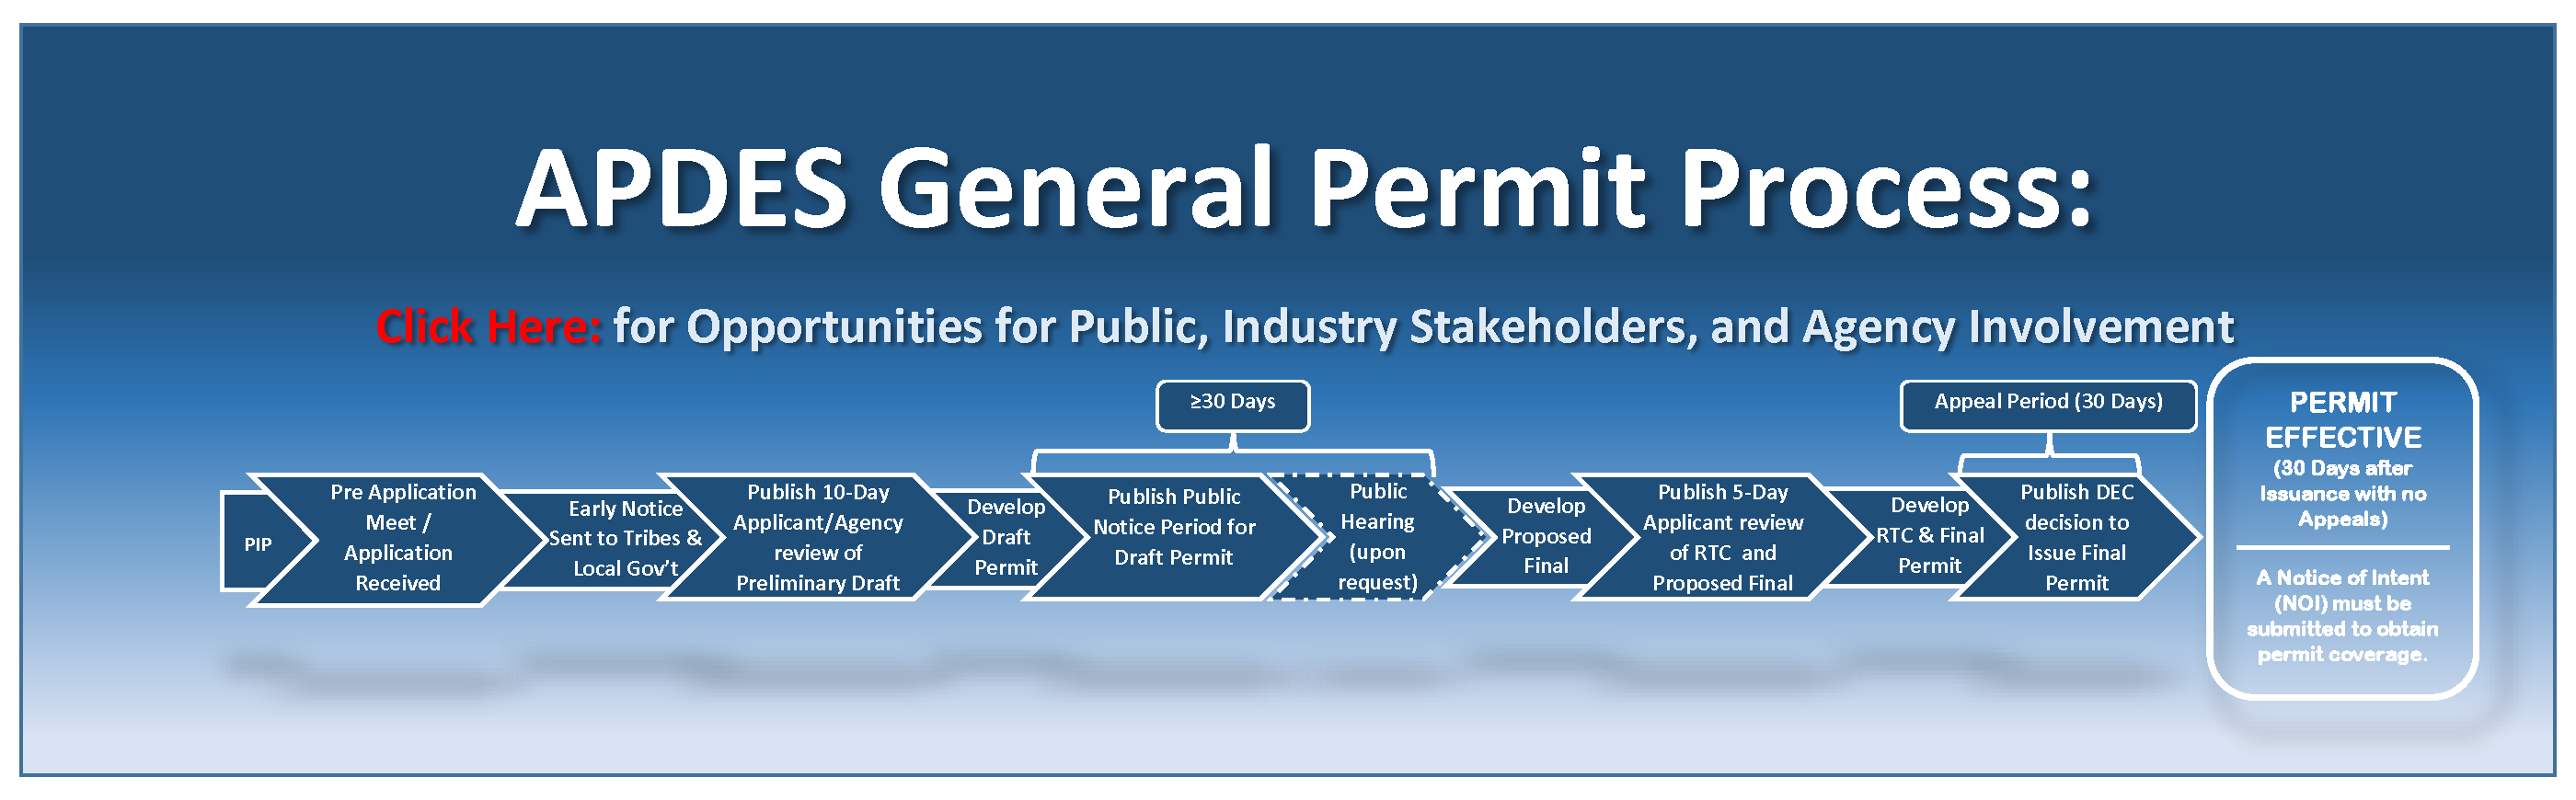 General Permit Process